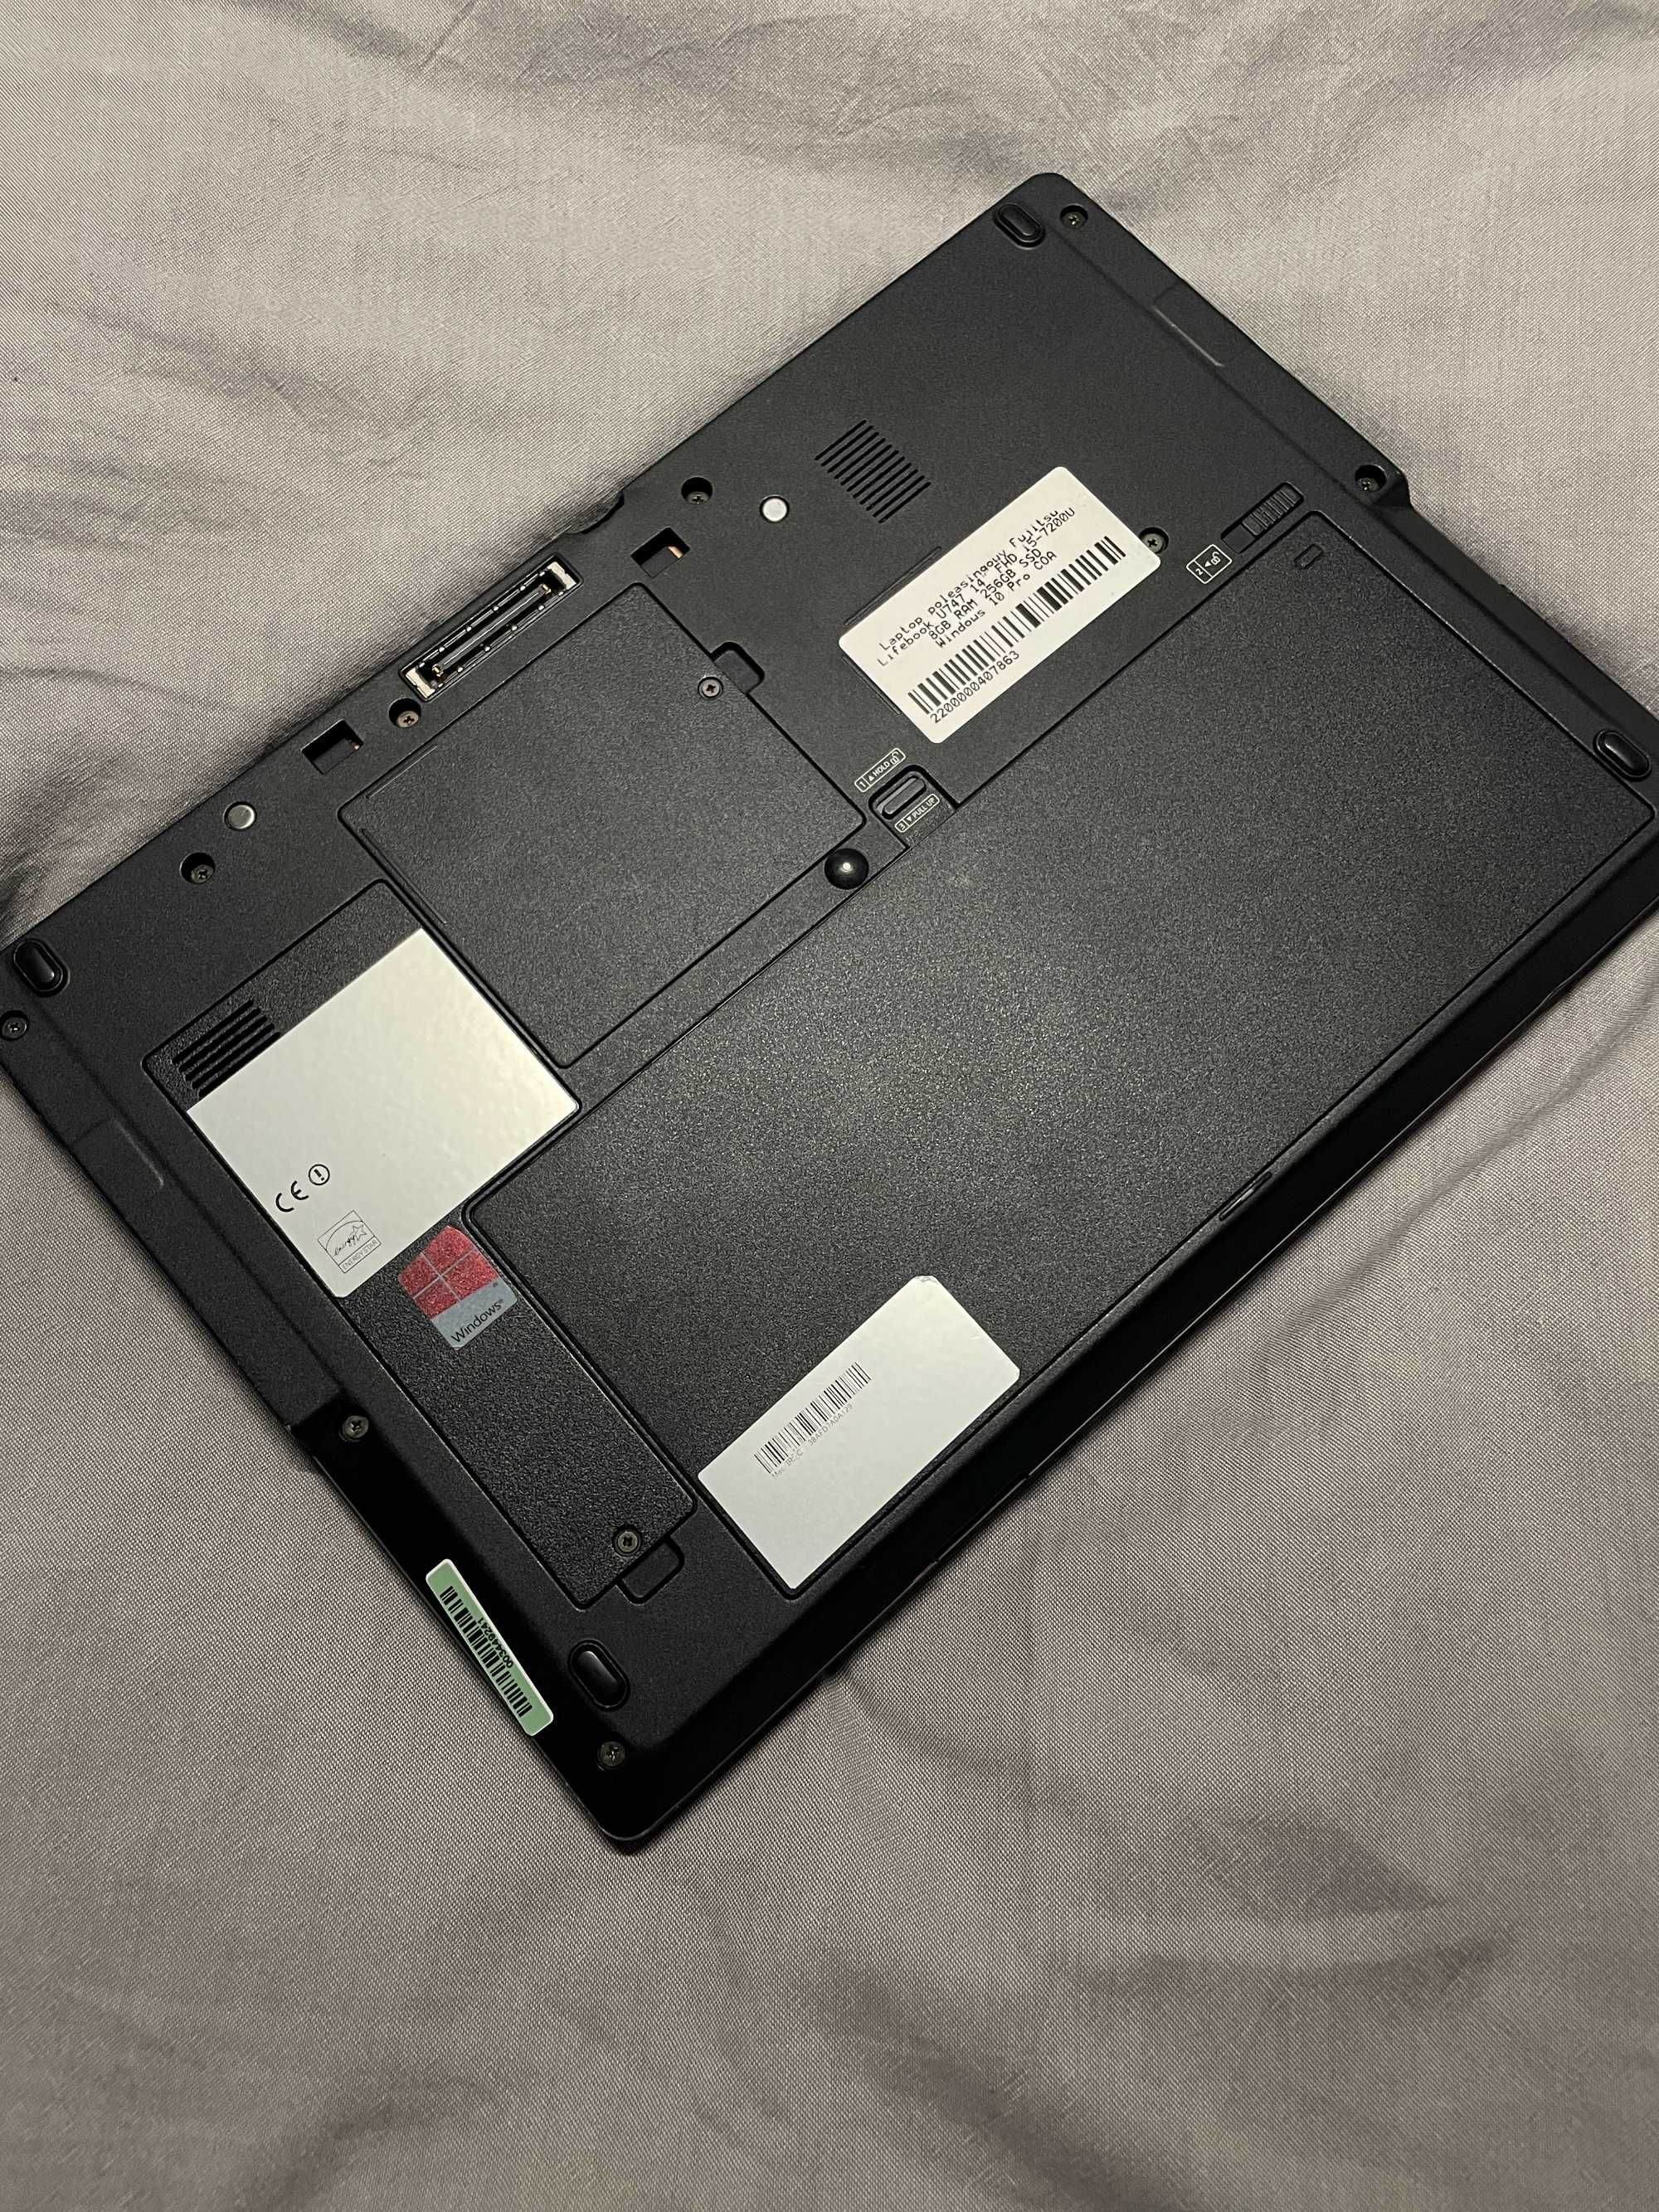 Laptop Fujitsu Lifebook U747 14"